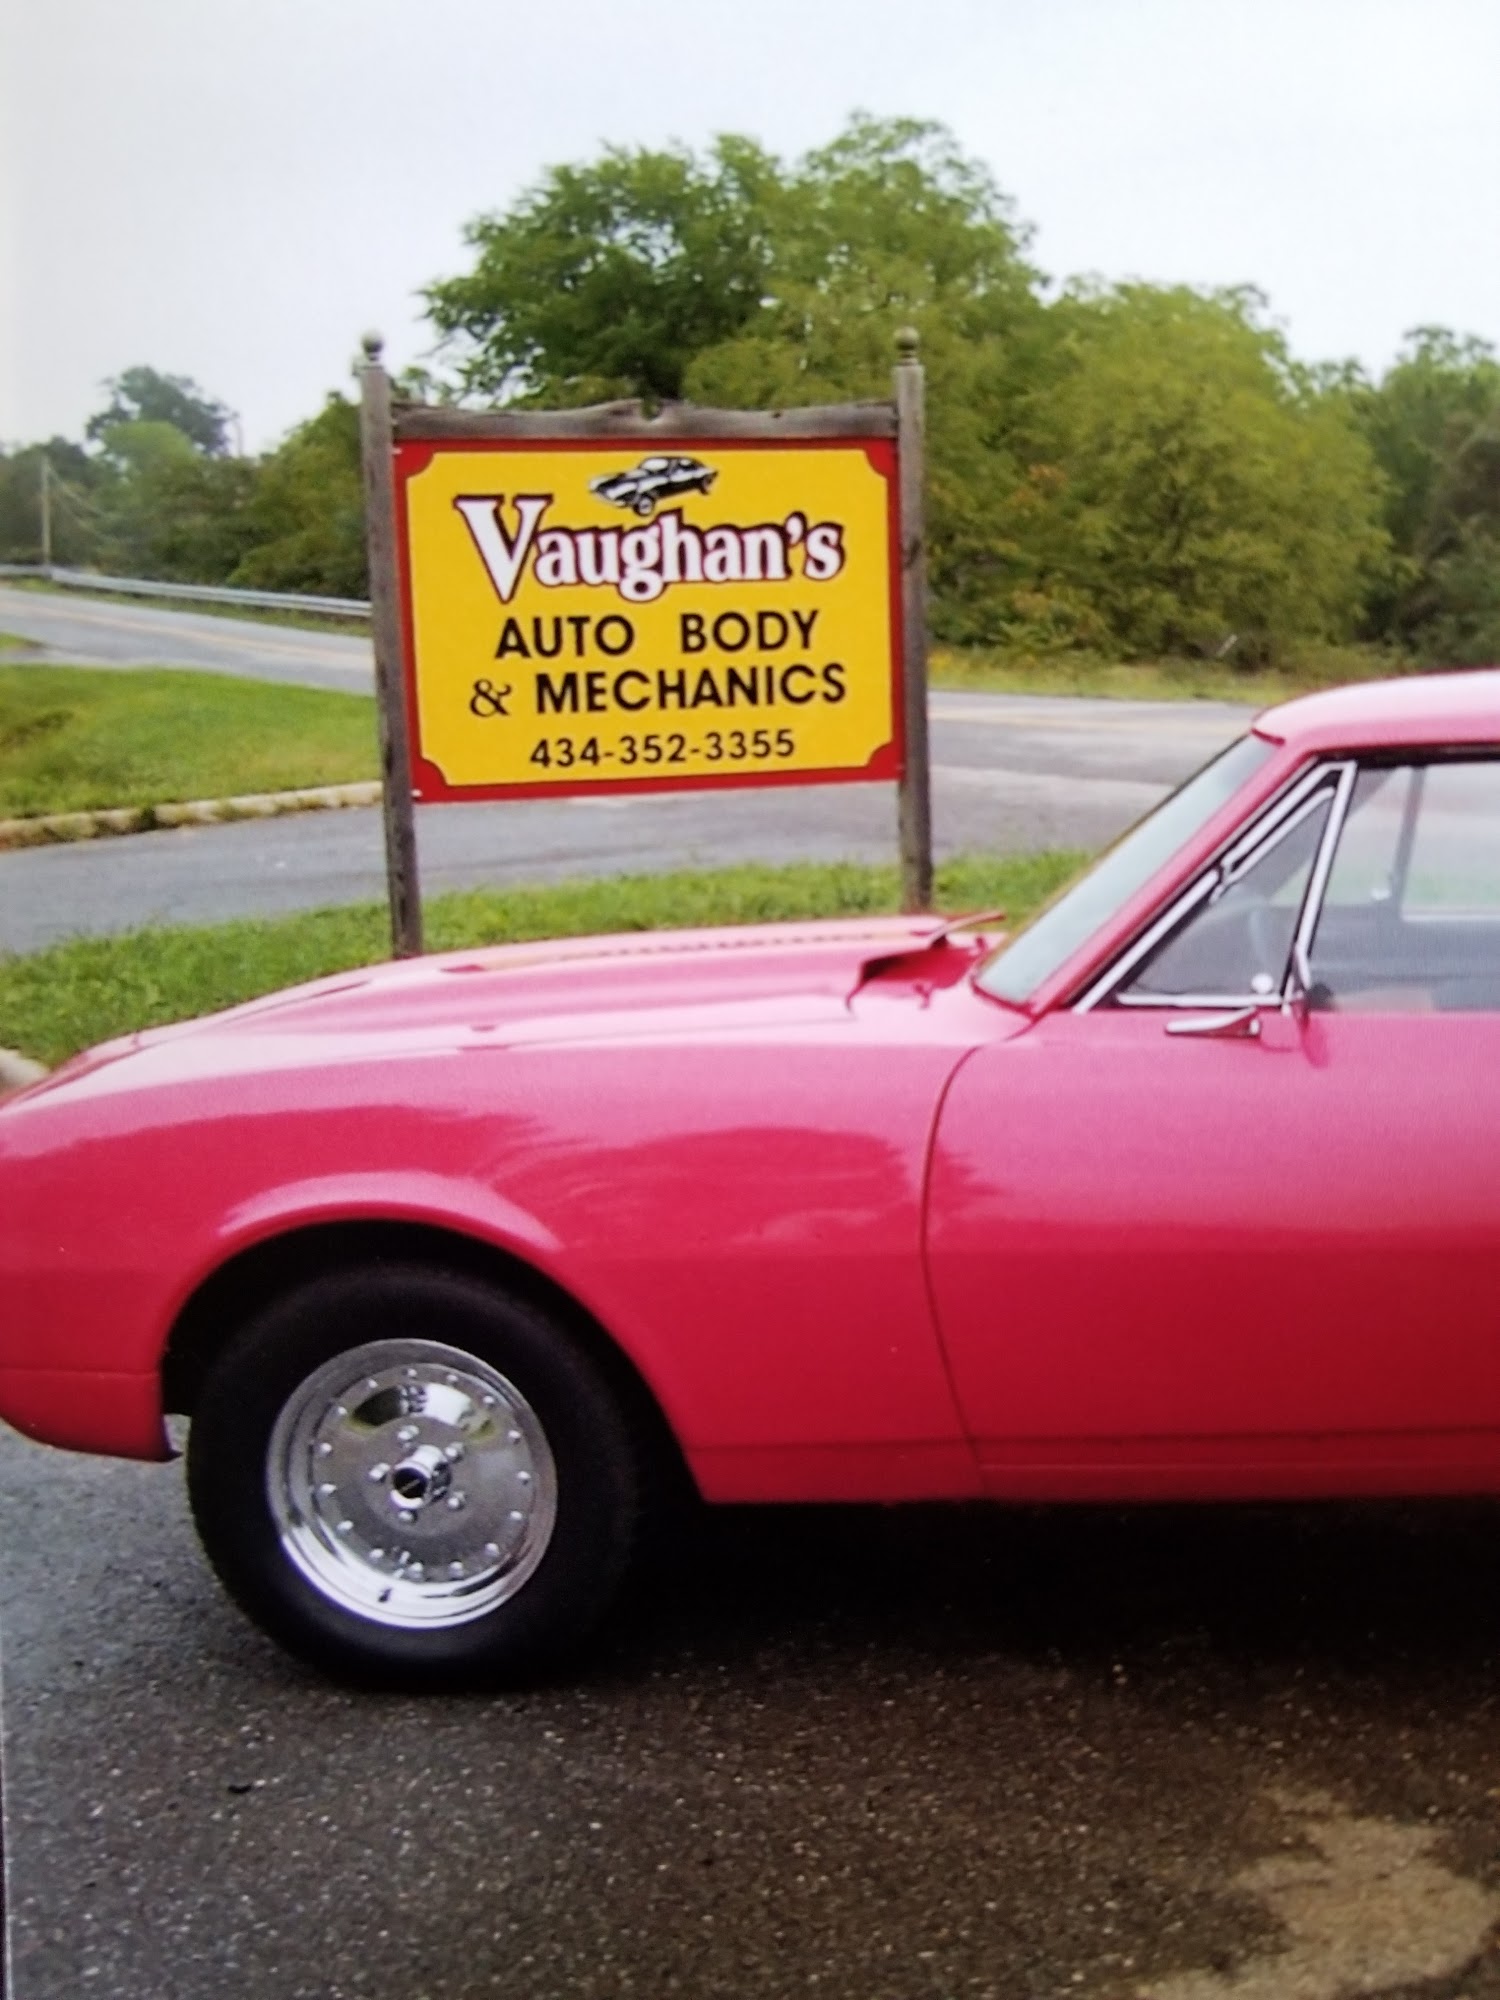 Vaughan's Auto Body & Mechanic